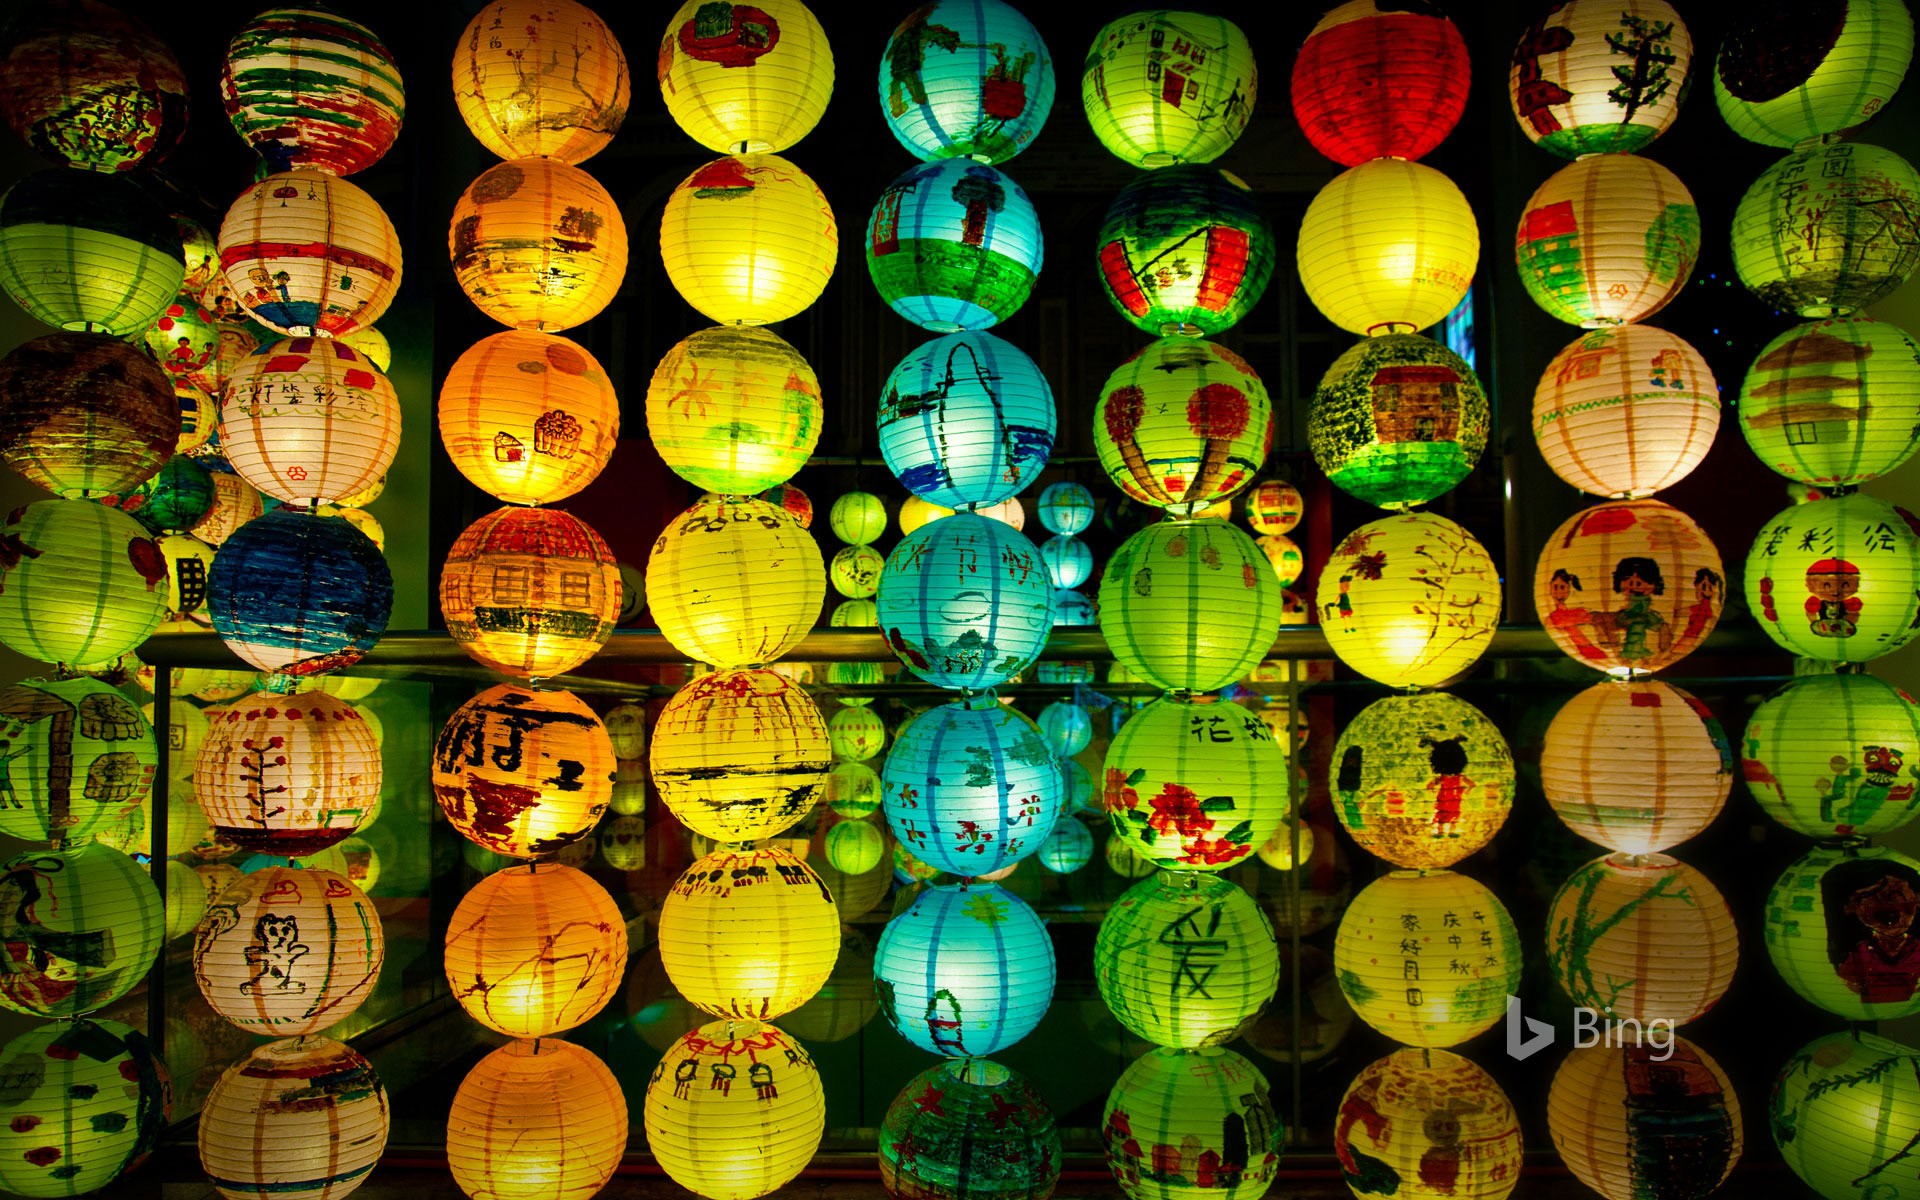 Lantern display celebrating the Mid-Autumn Festival in Singapore